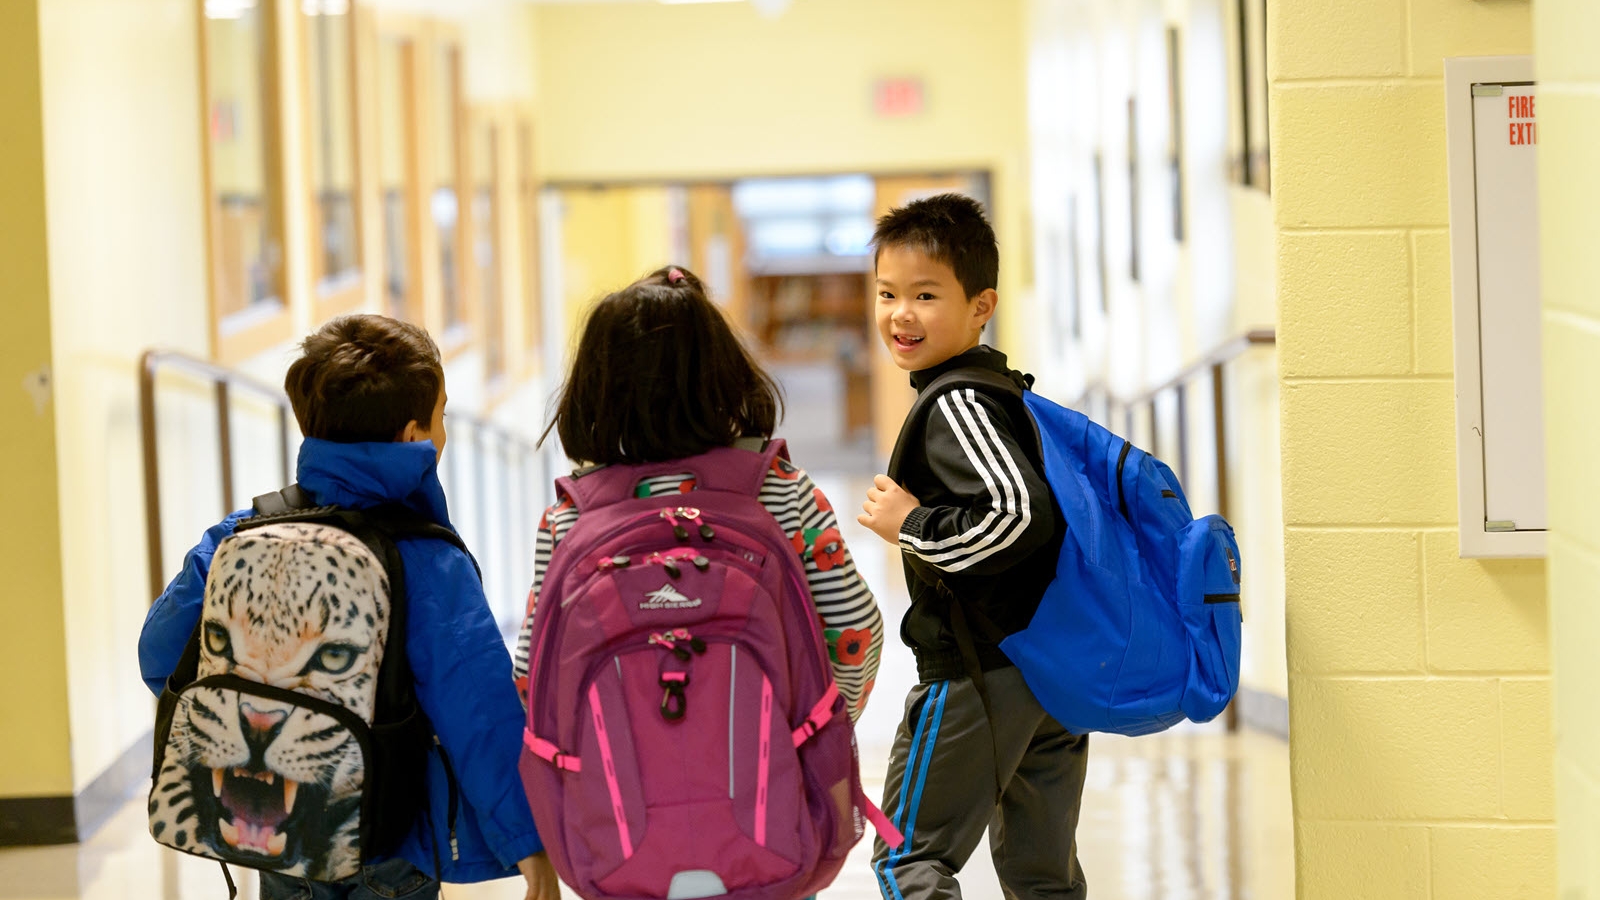 Elementary age students walking in a school hallway wearing backpacks. 